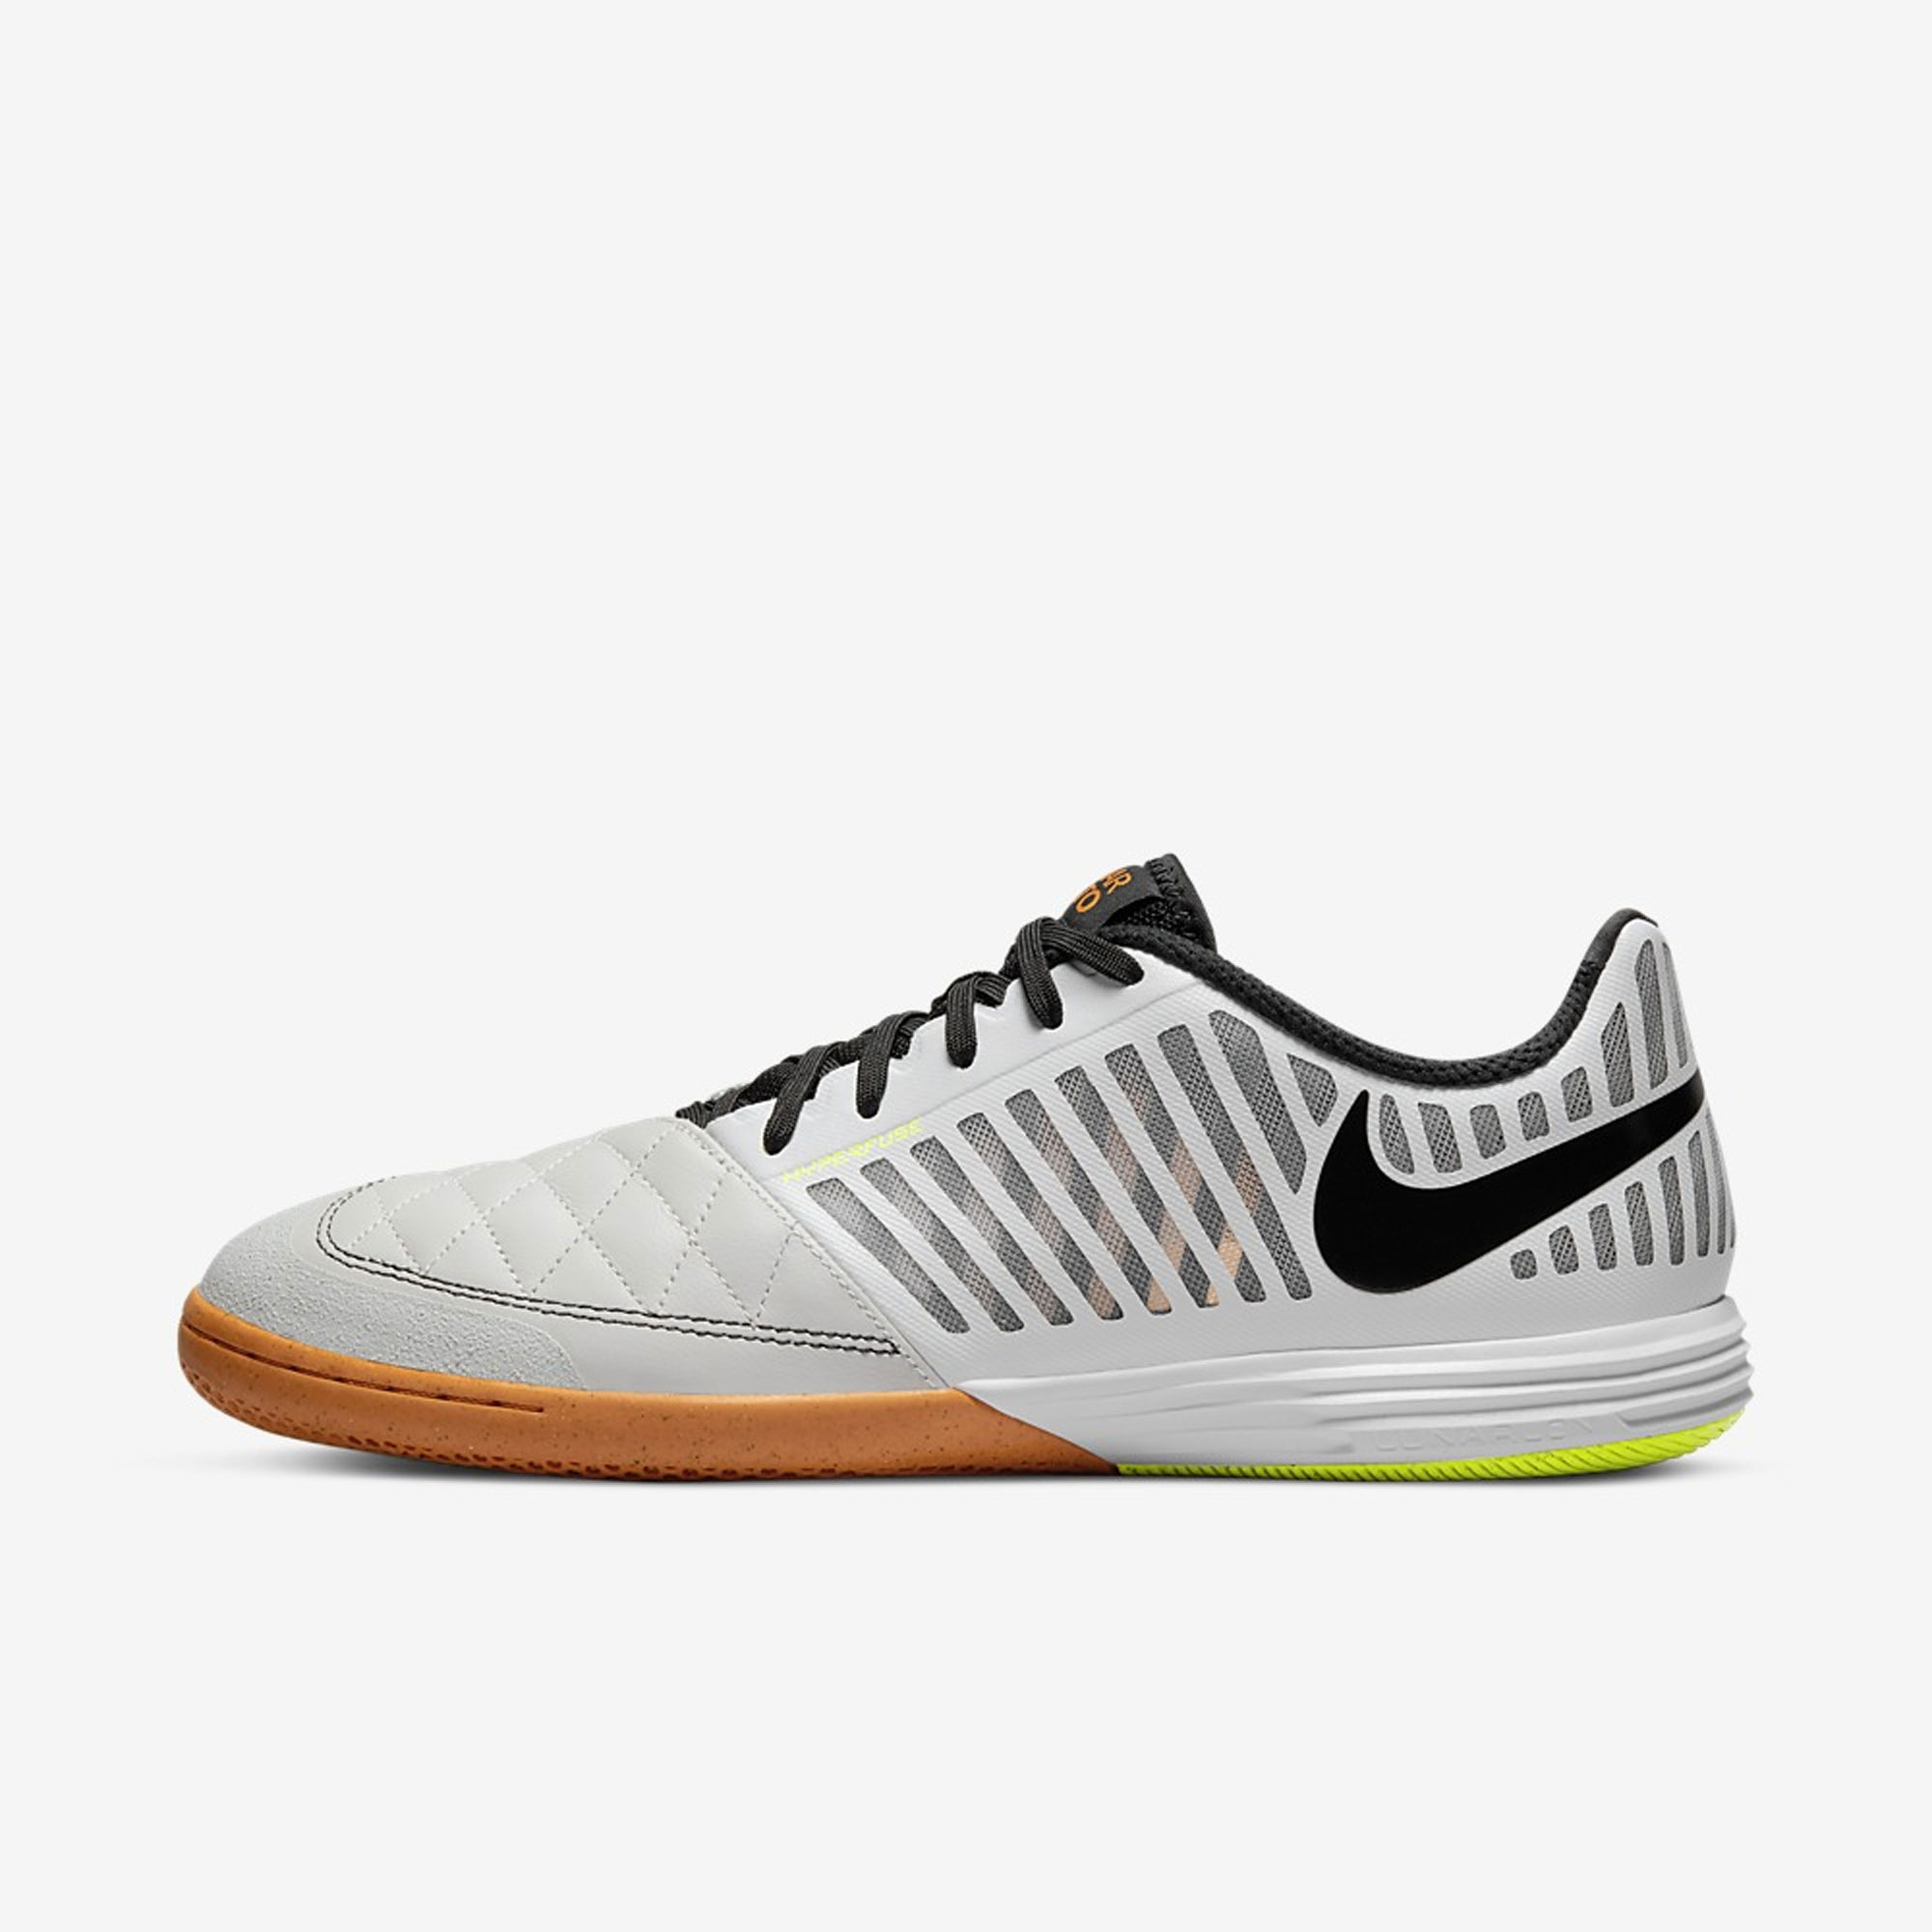 stefanssoccer.com:Nike Lunar Gato II Indoor Soccer Shoes - / Photon Dust / Light Curry Black